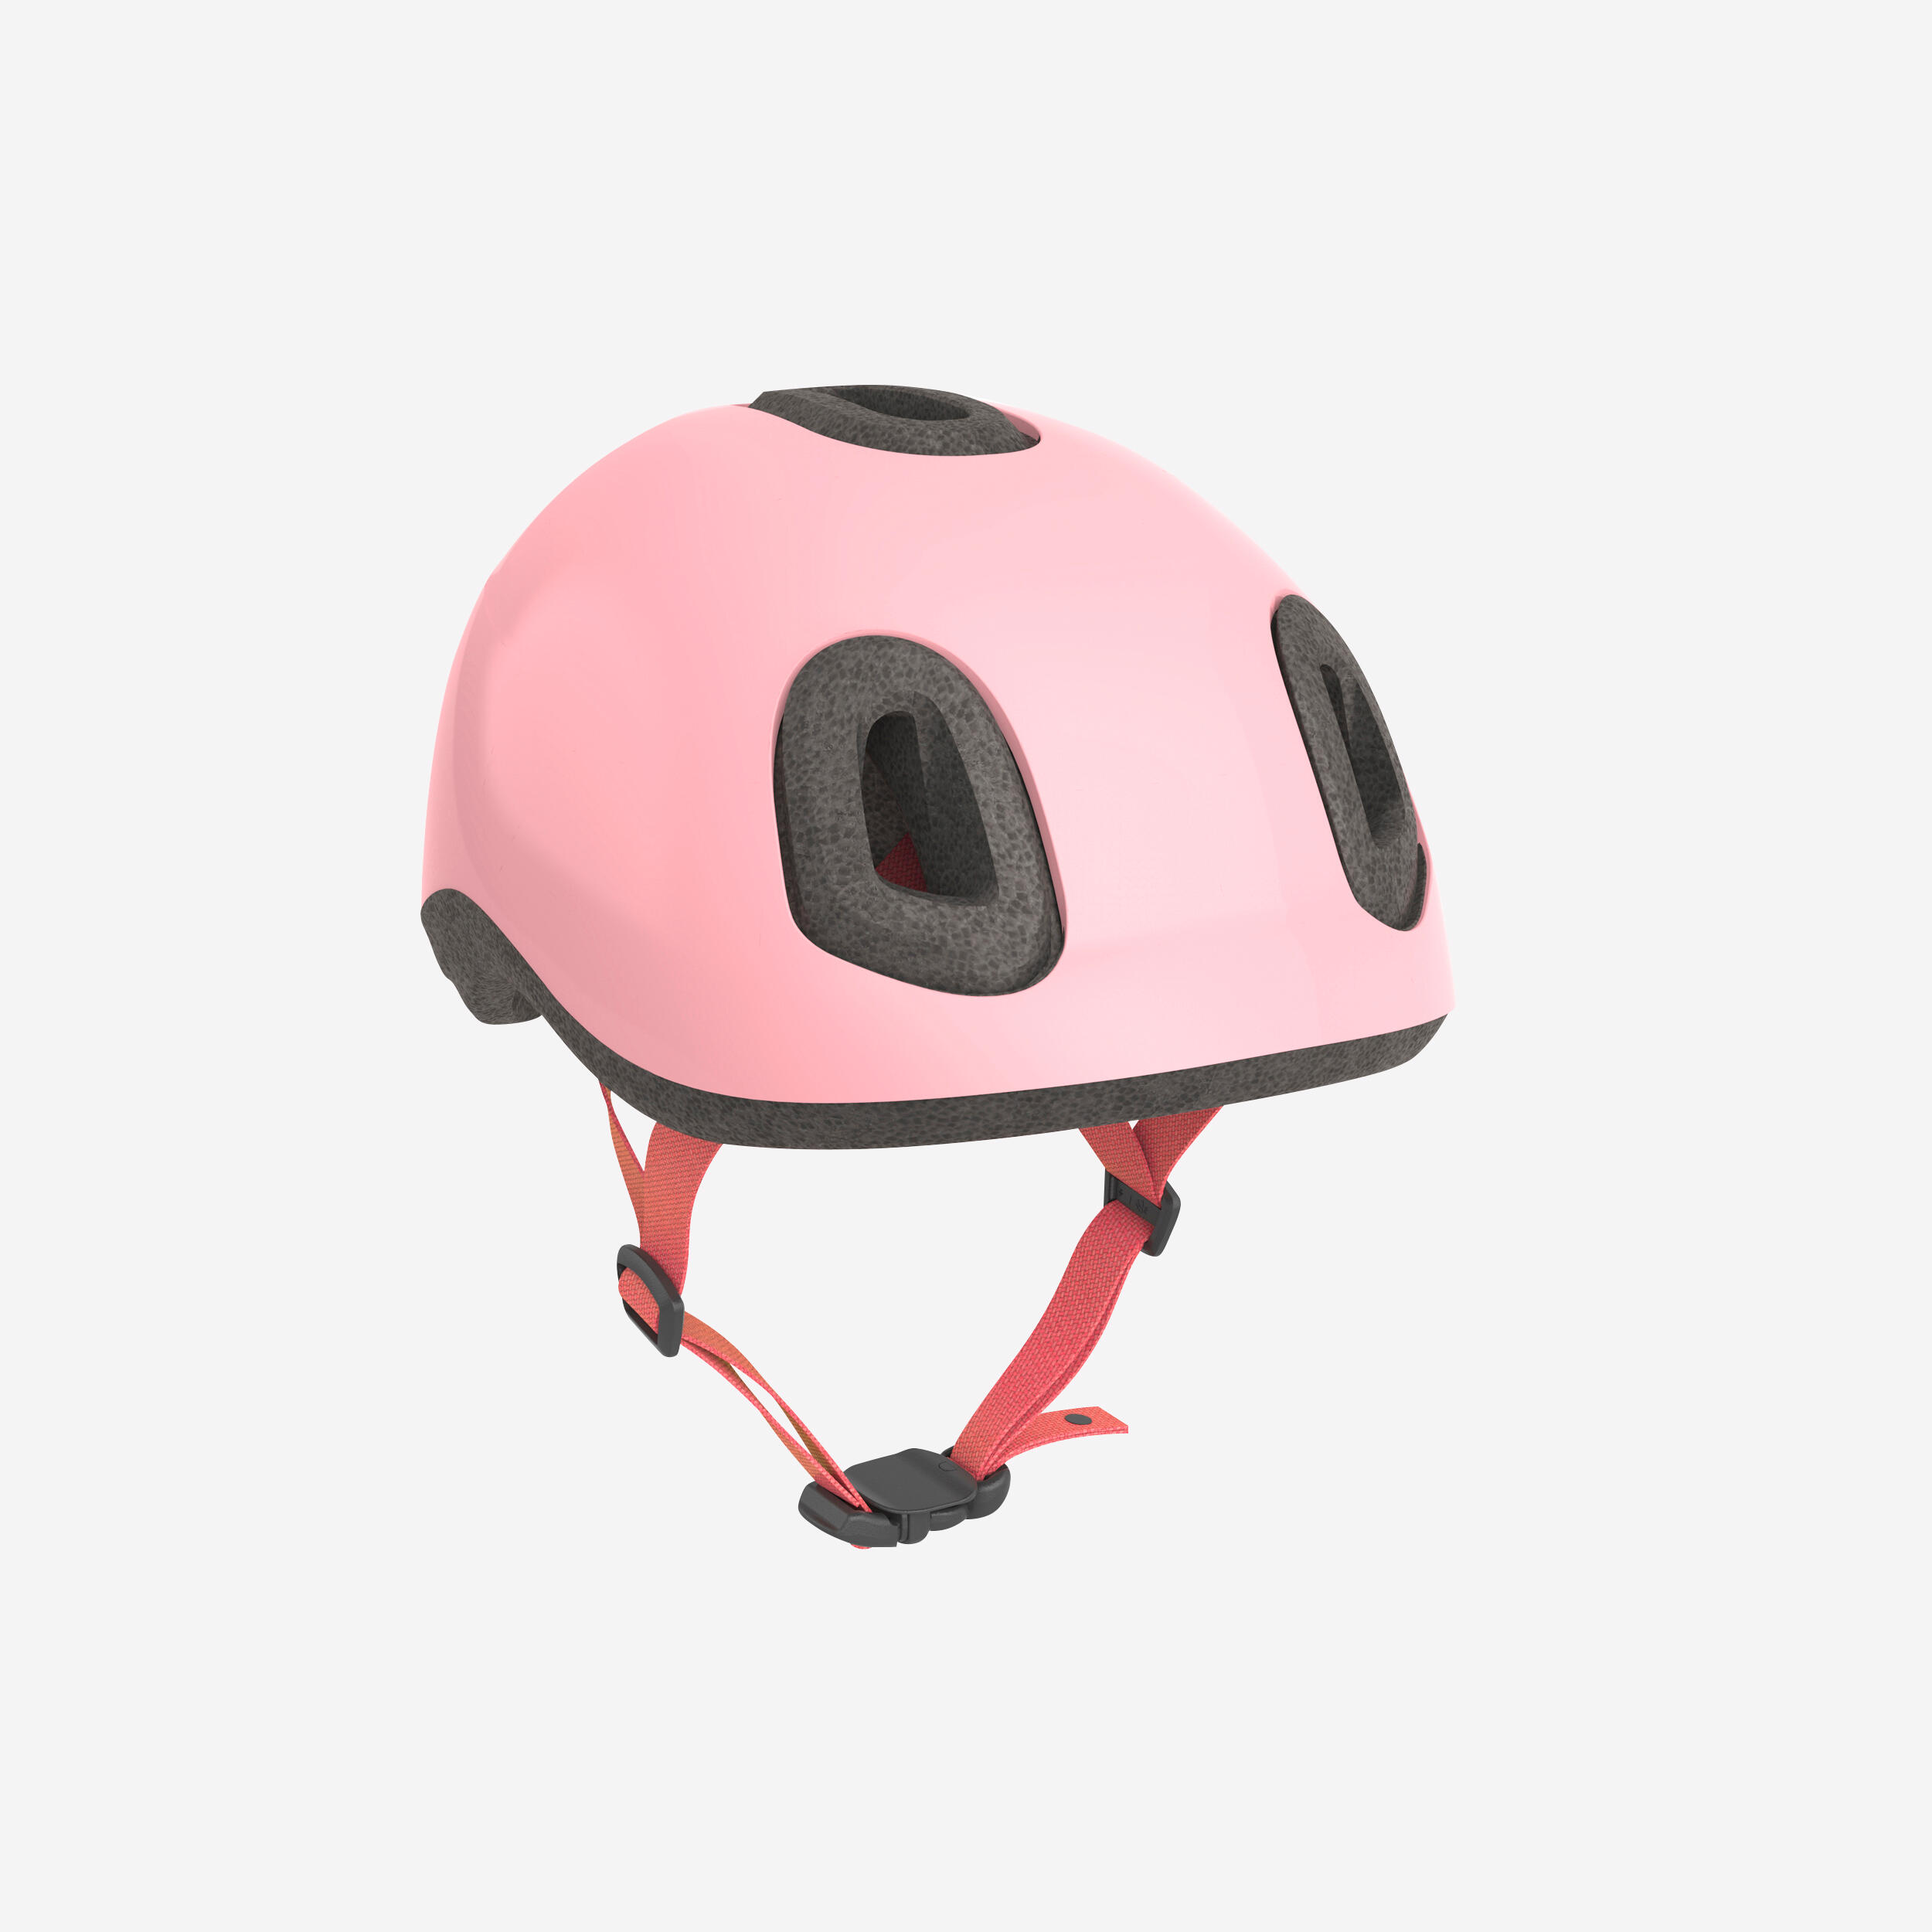 Kids Bike Helmet 500 Pink Btwin 8604841 